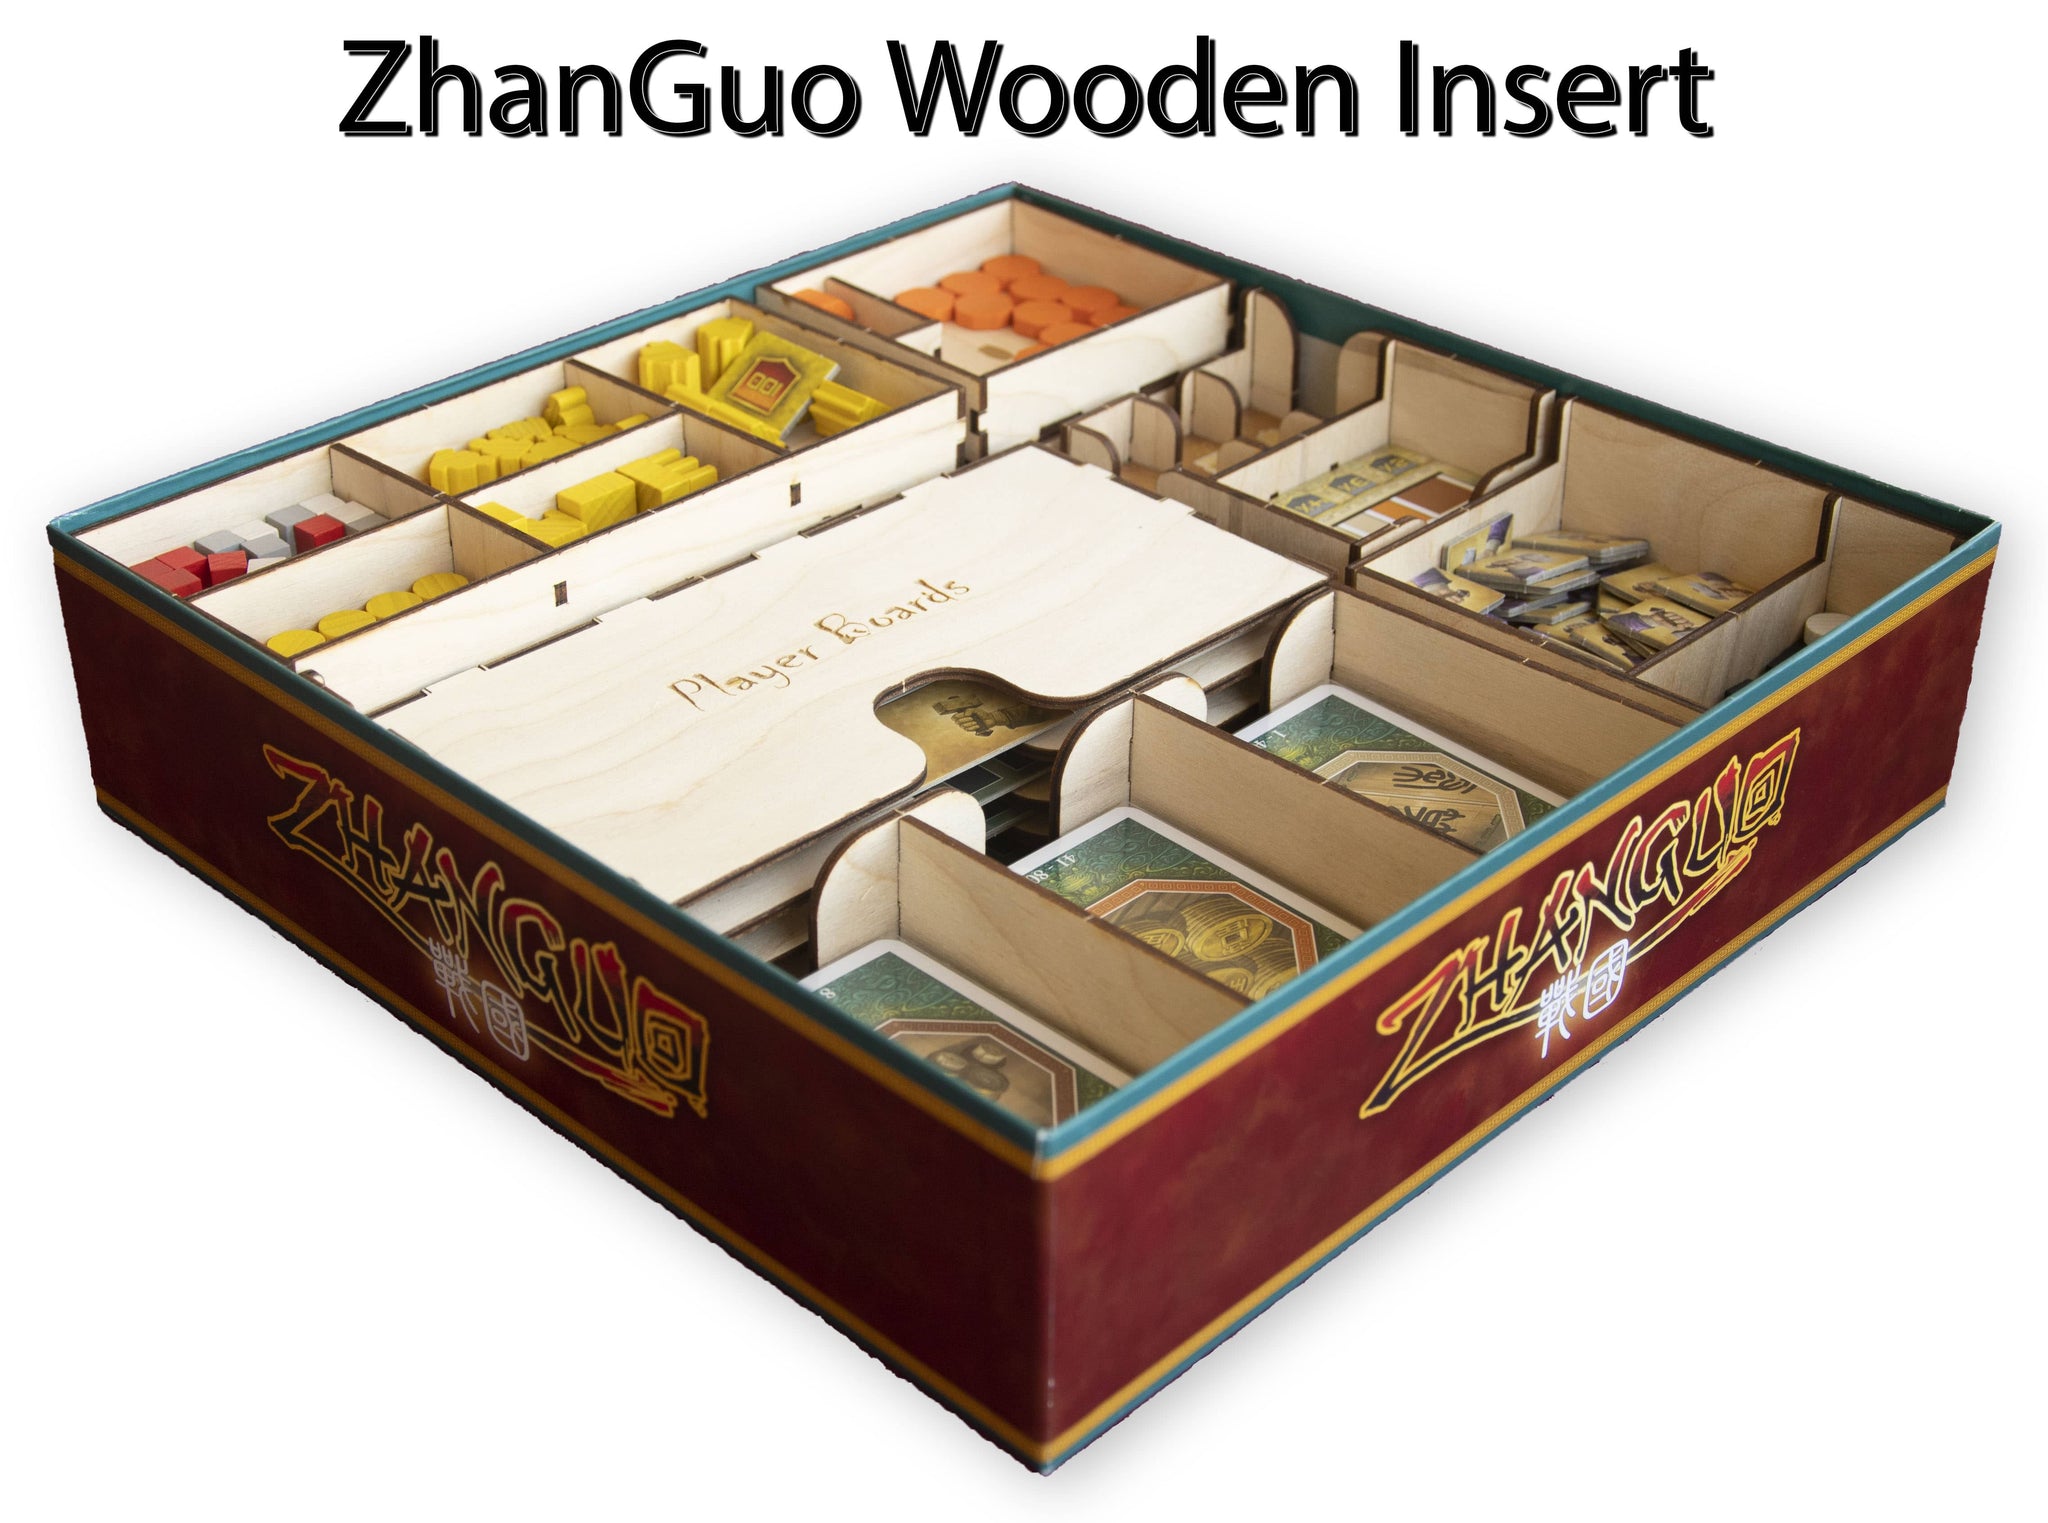 ZhanGuo Wooden Insert/Organizer - The Nifty Organizer